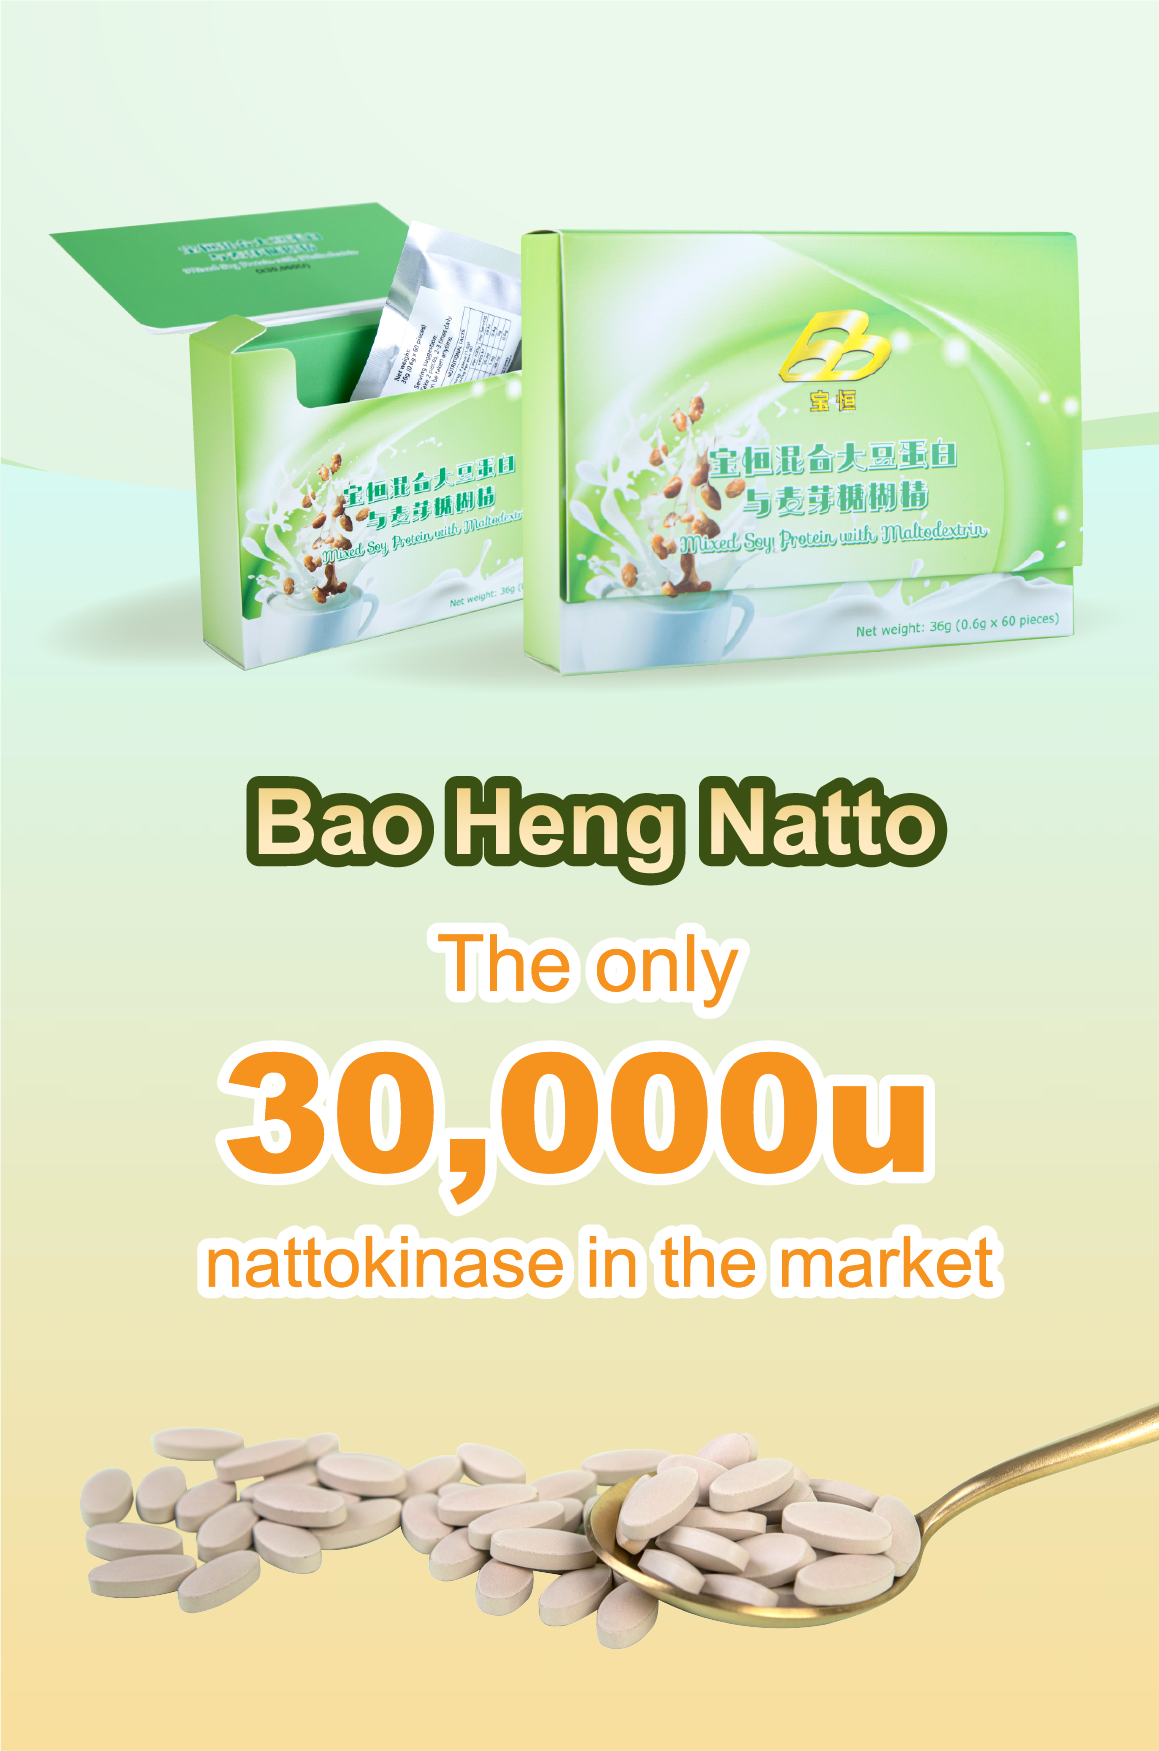 Bao Heng Natto dissolve blood clots